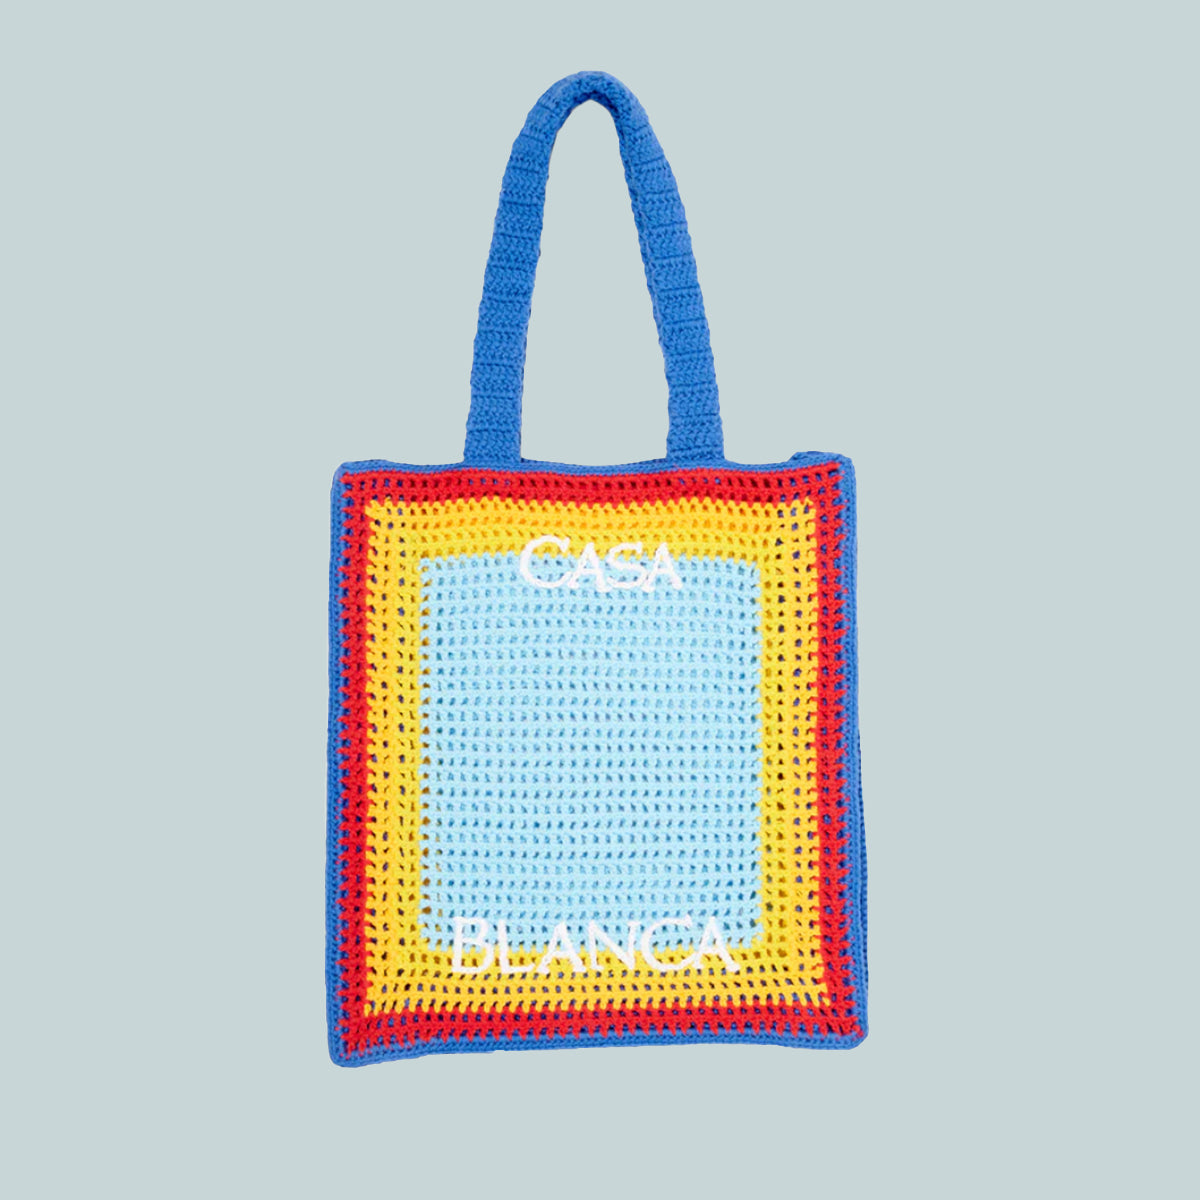 Arch crochet bag blue